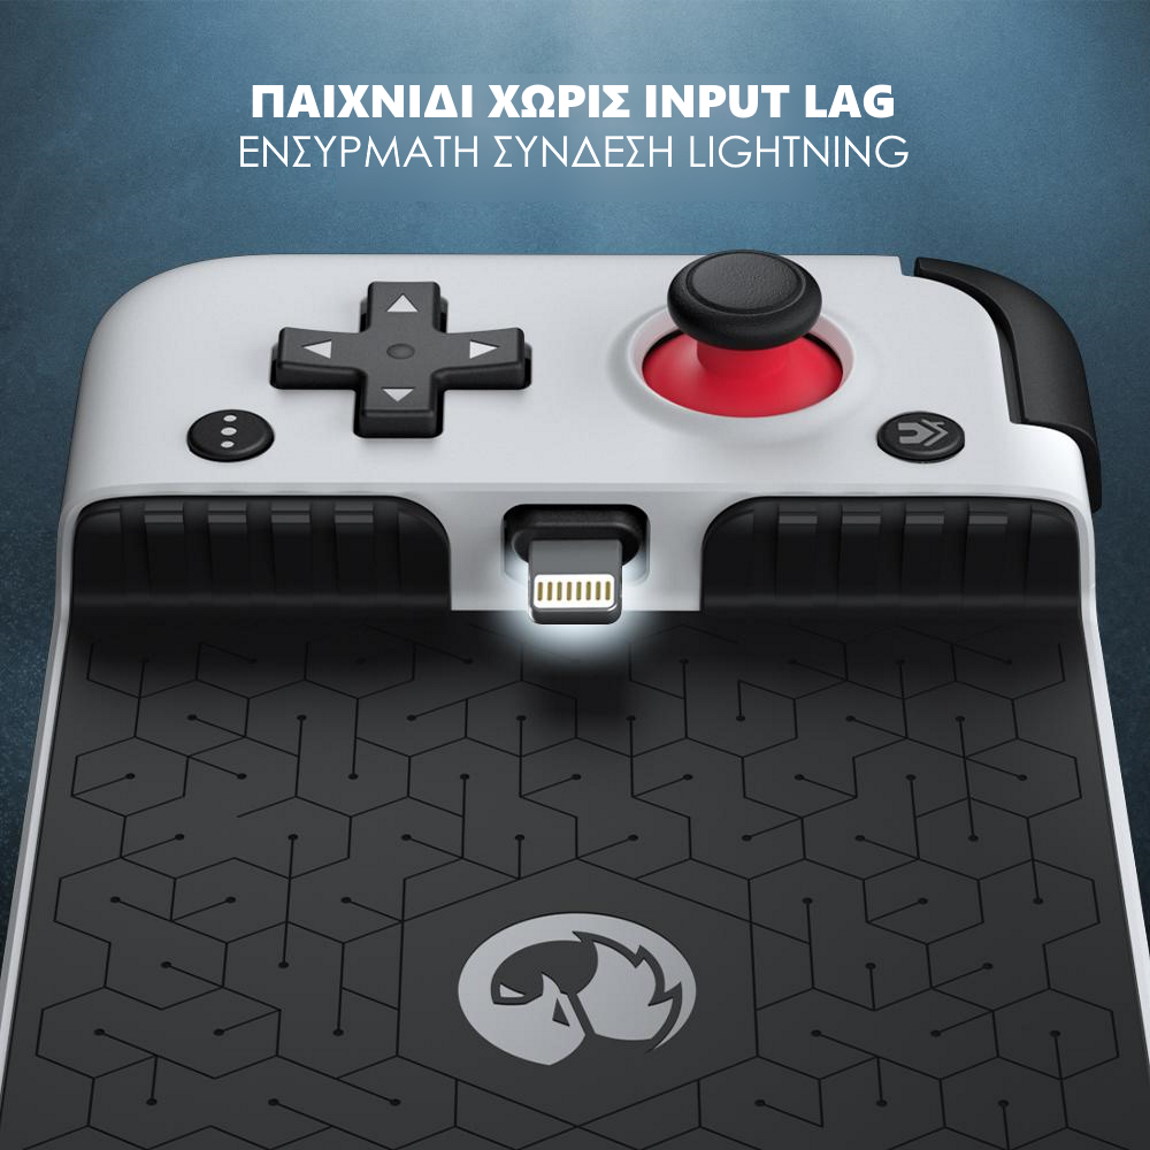 Gamesir X2 Lightning Gaming Controller για iPhone ενσύρματη σύνδεση